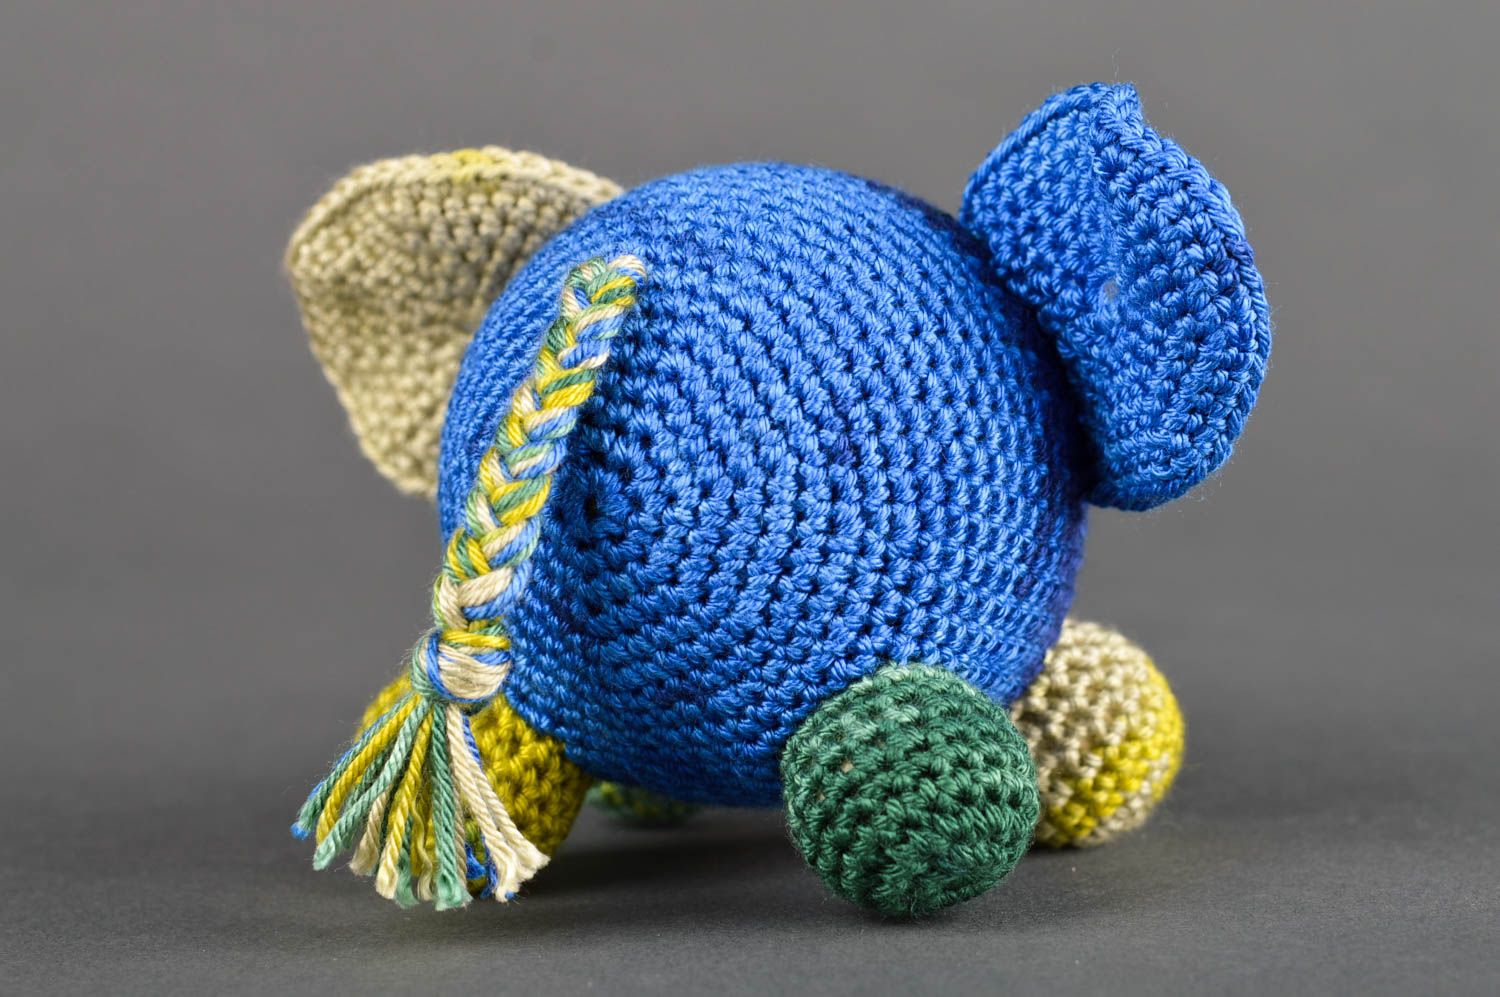 Unusual handmade crochet toy soft childrens toys interior decorating gift ideas photo 5